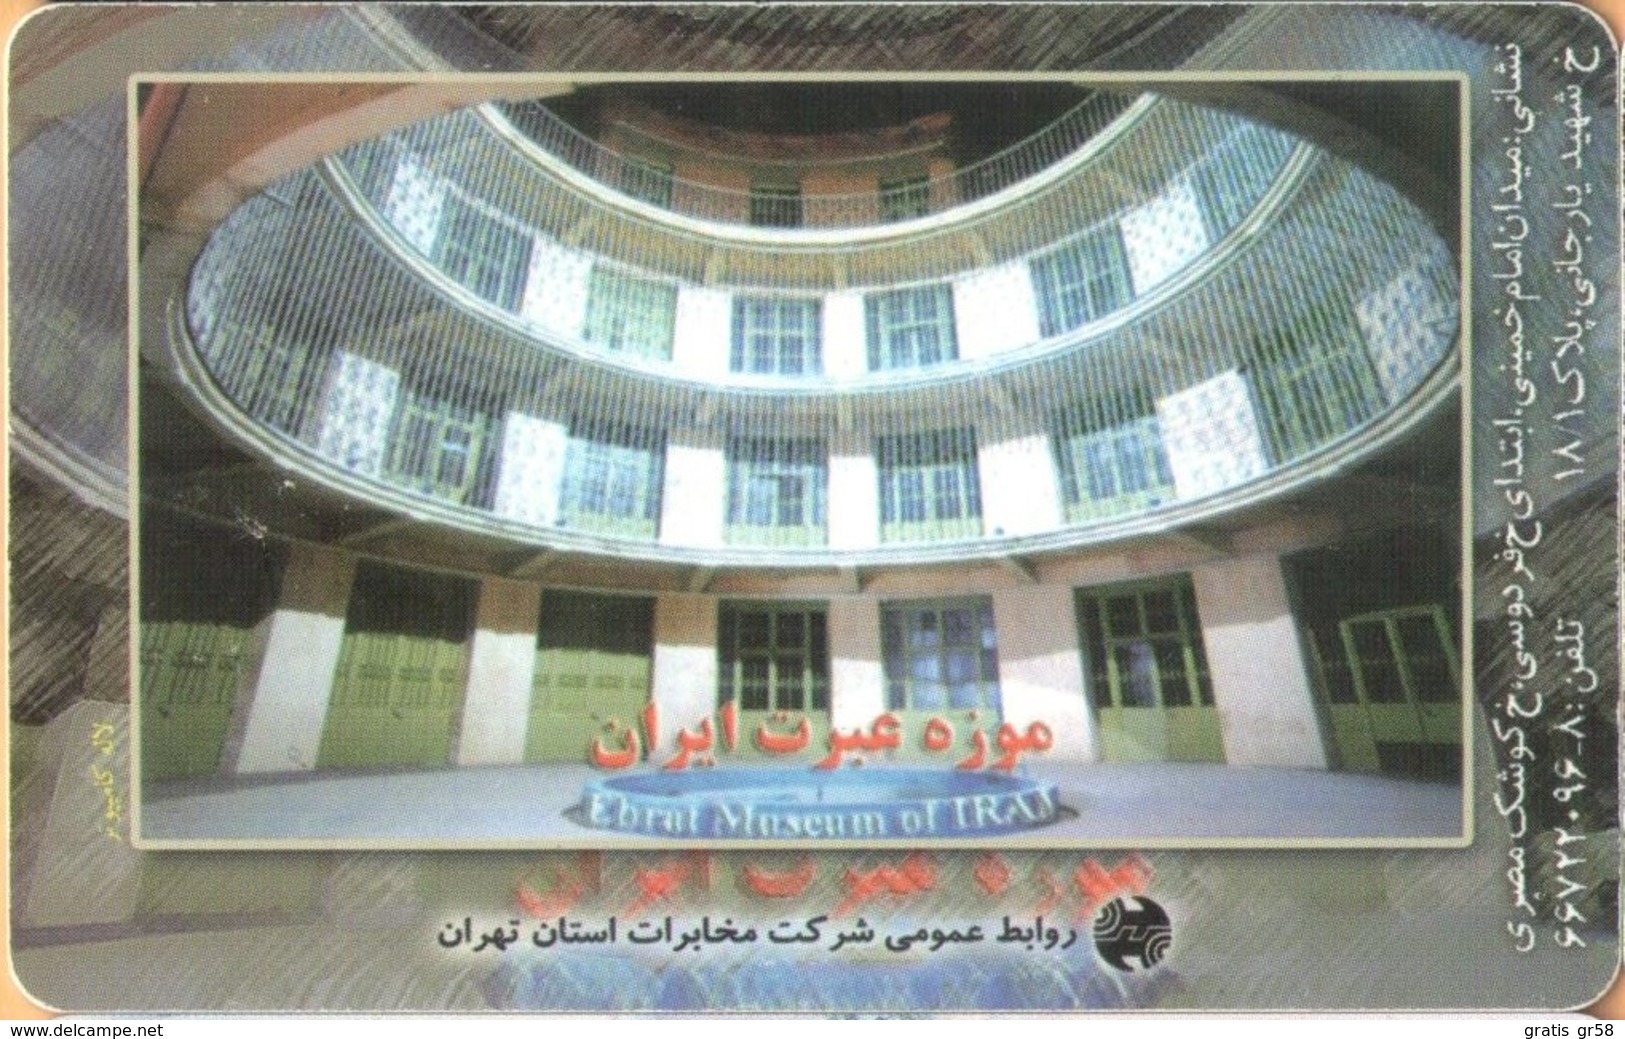 Iran - TCT - Tahran, IR-C-TCT-007, Azadi Square / Ebrat Museum Of Iran, Used As Scan - Iran